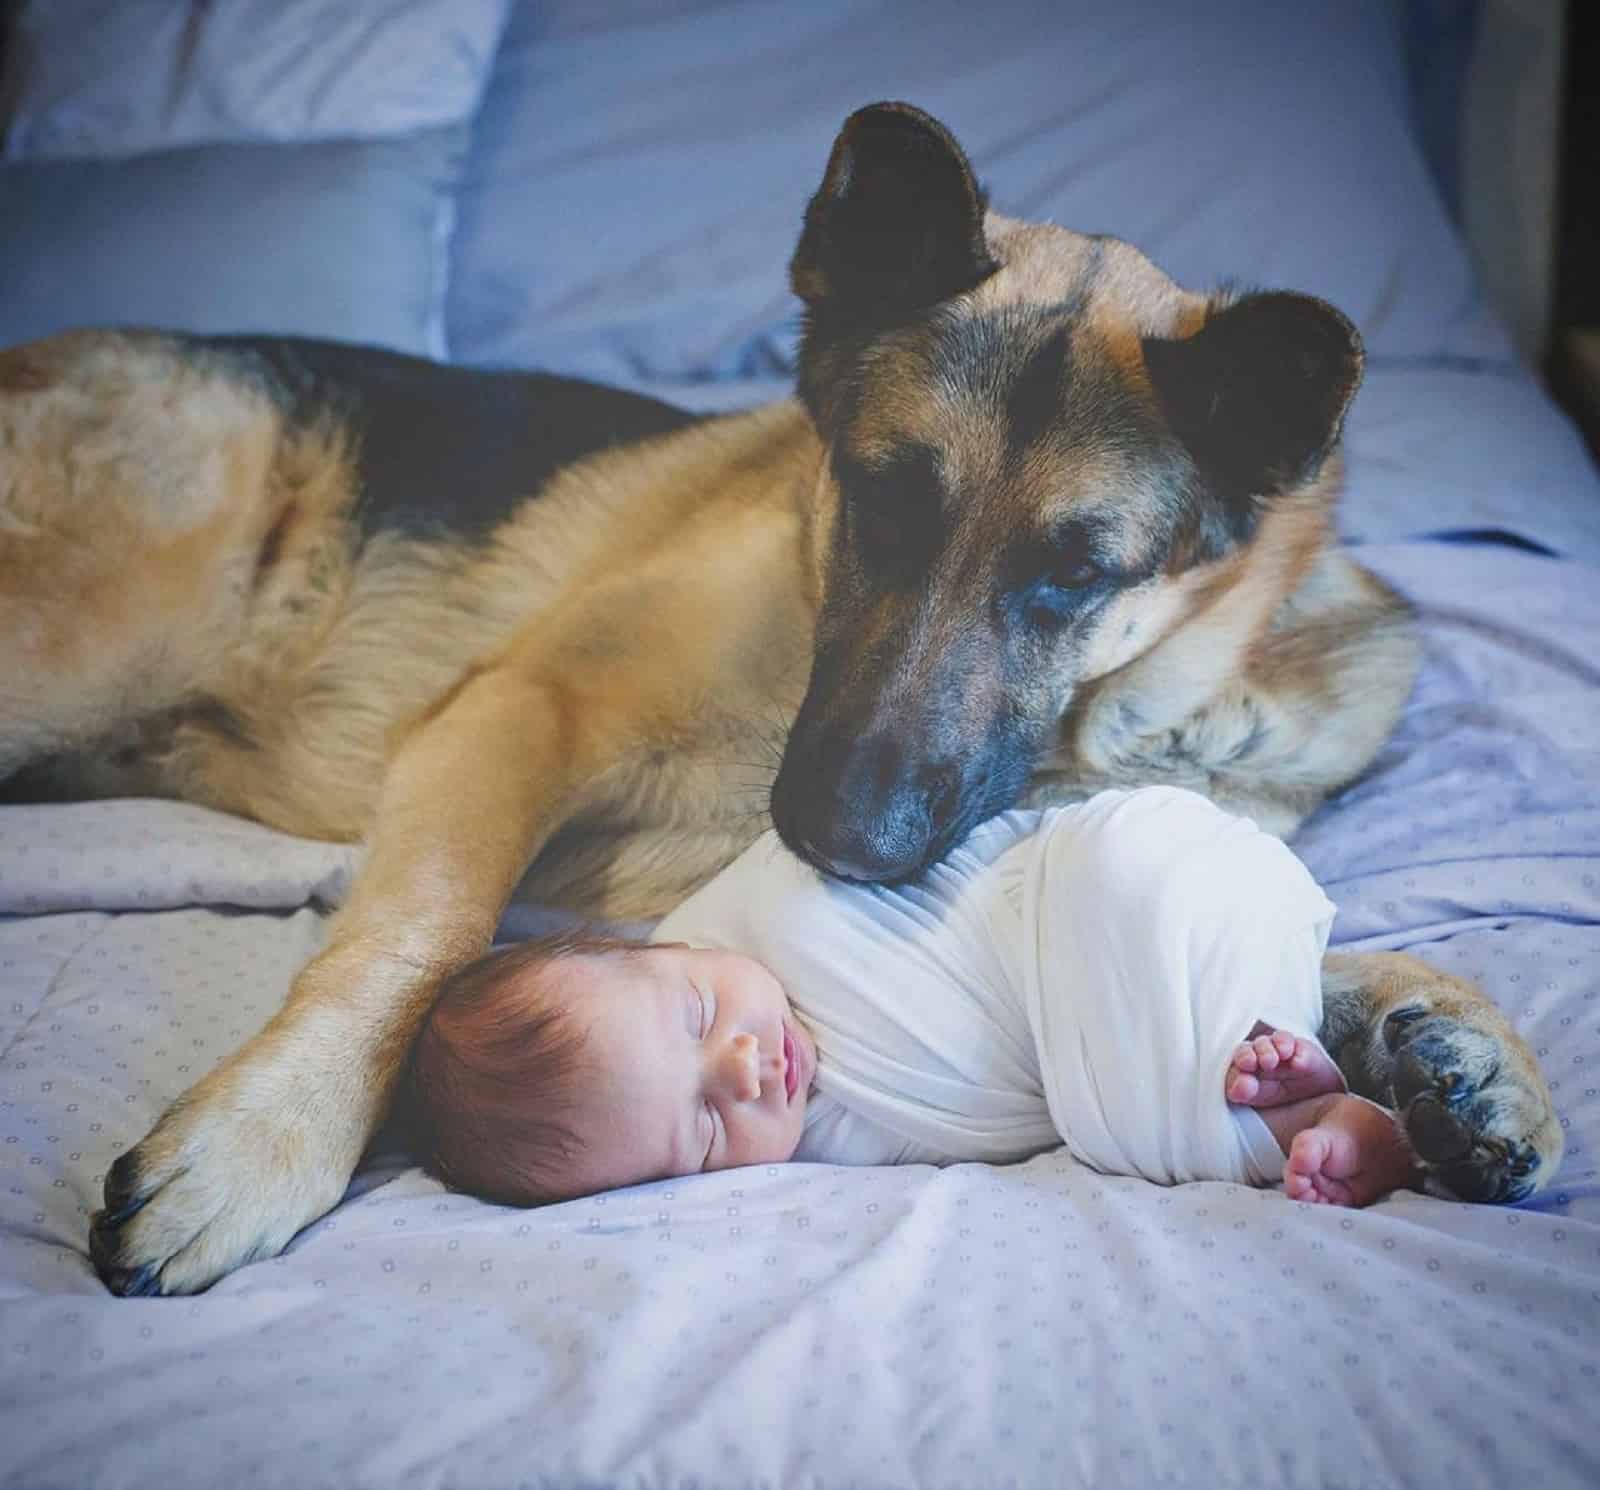 german shepherd dog lying beside a baby on the bed